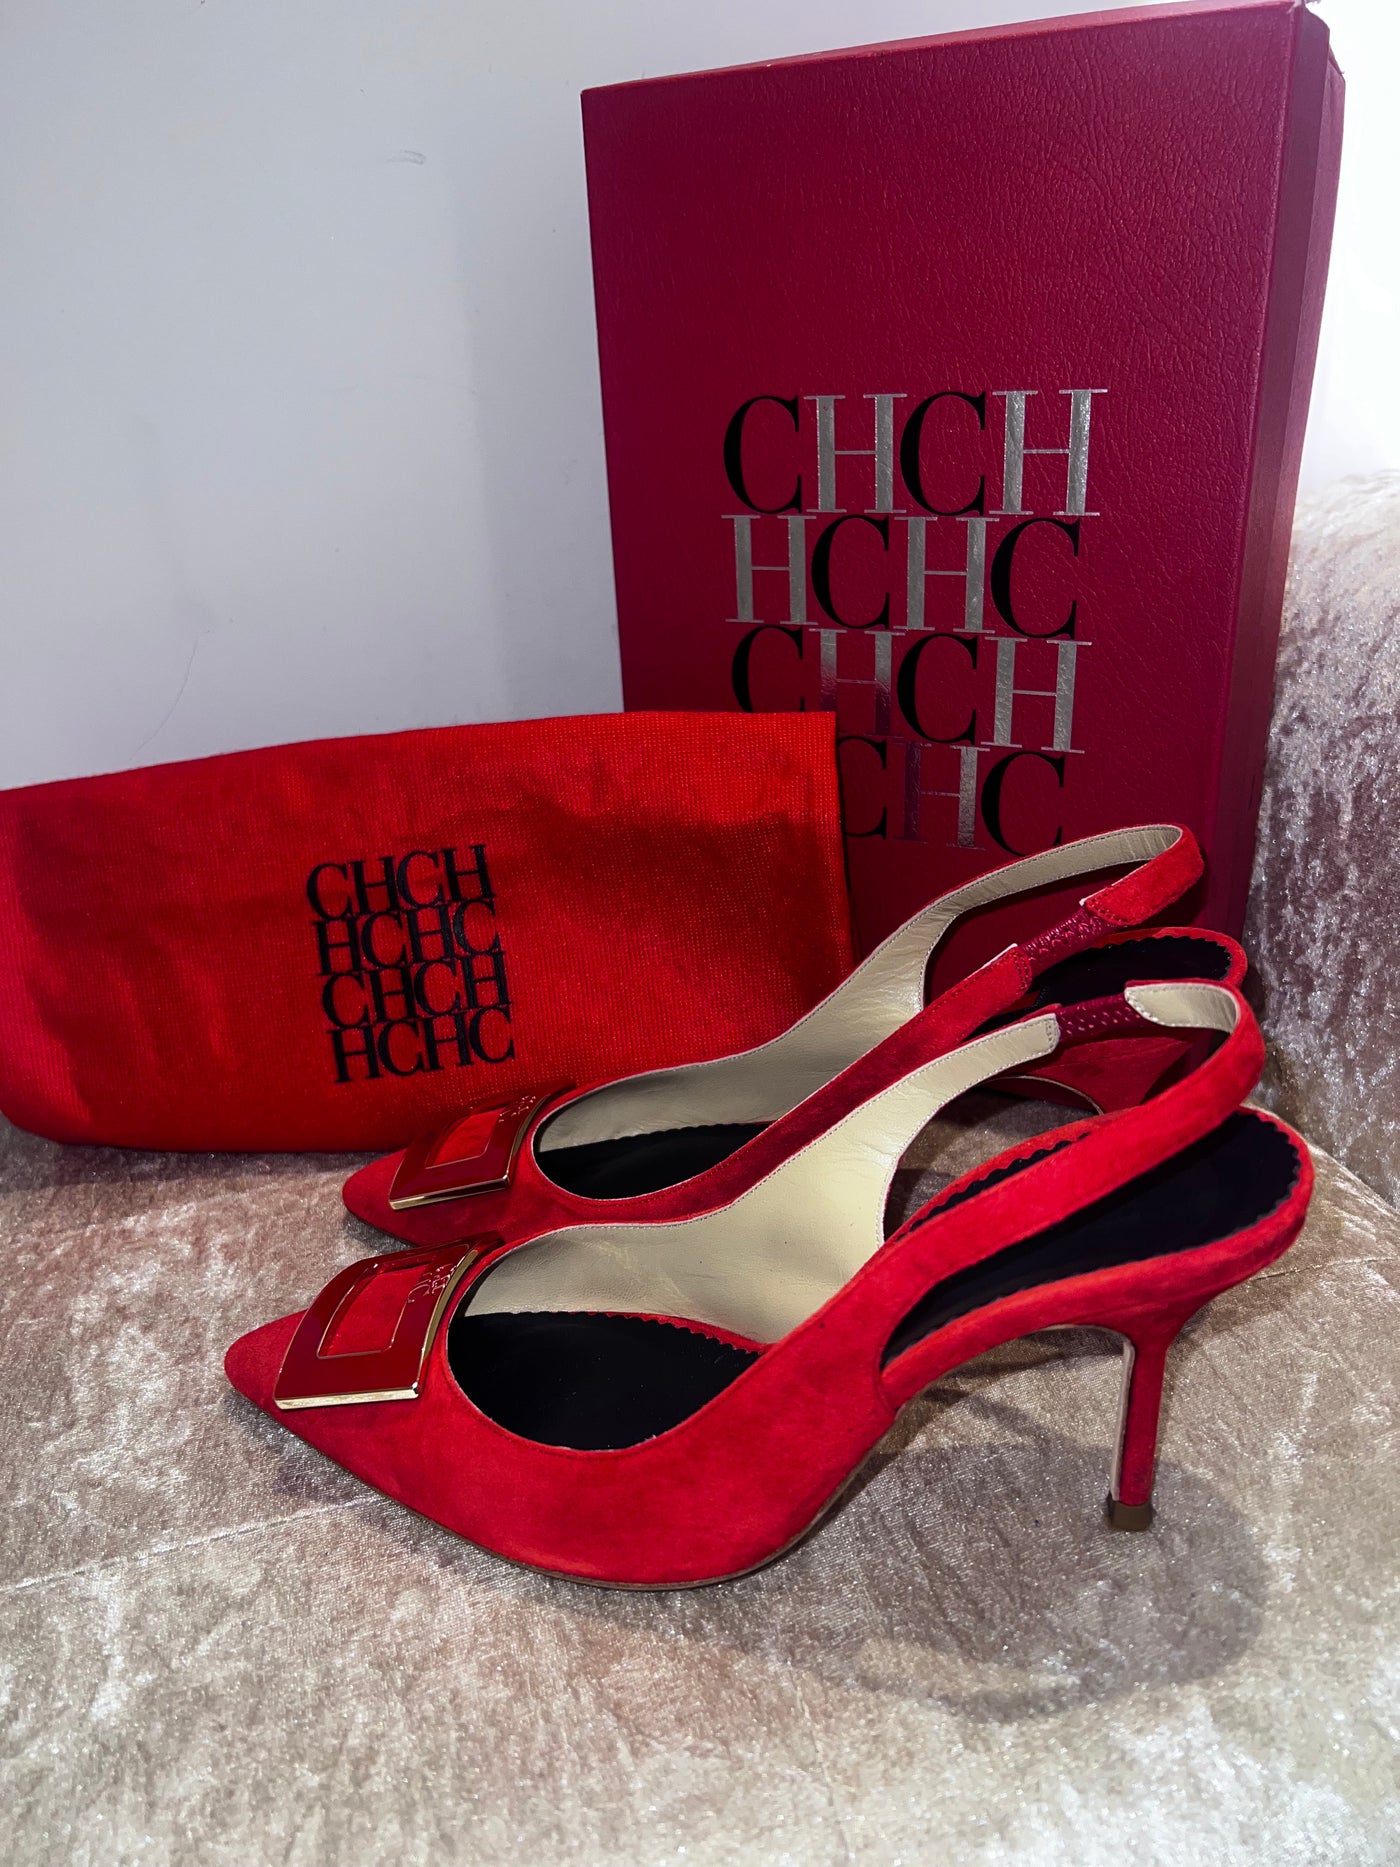 Carolina Herrera red suede heels size 40